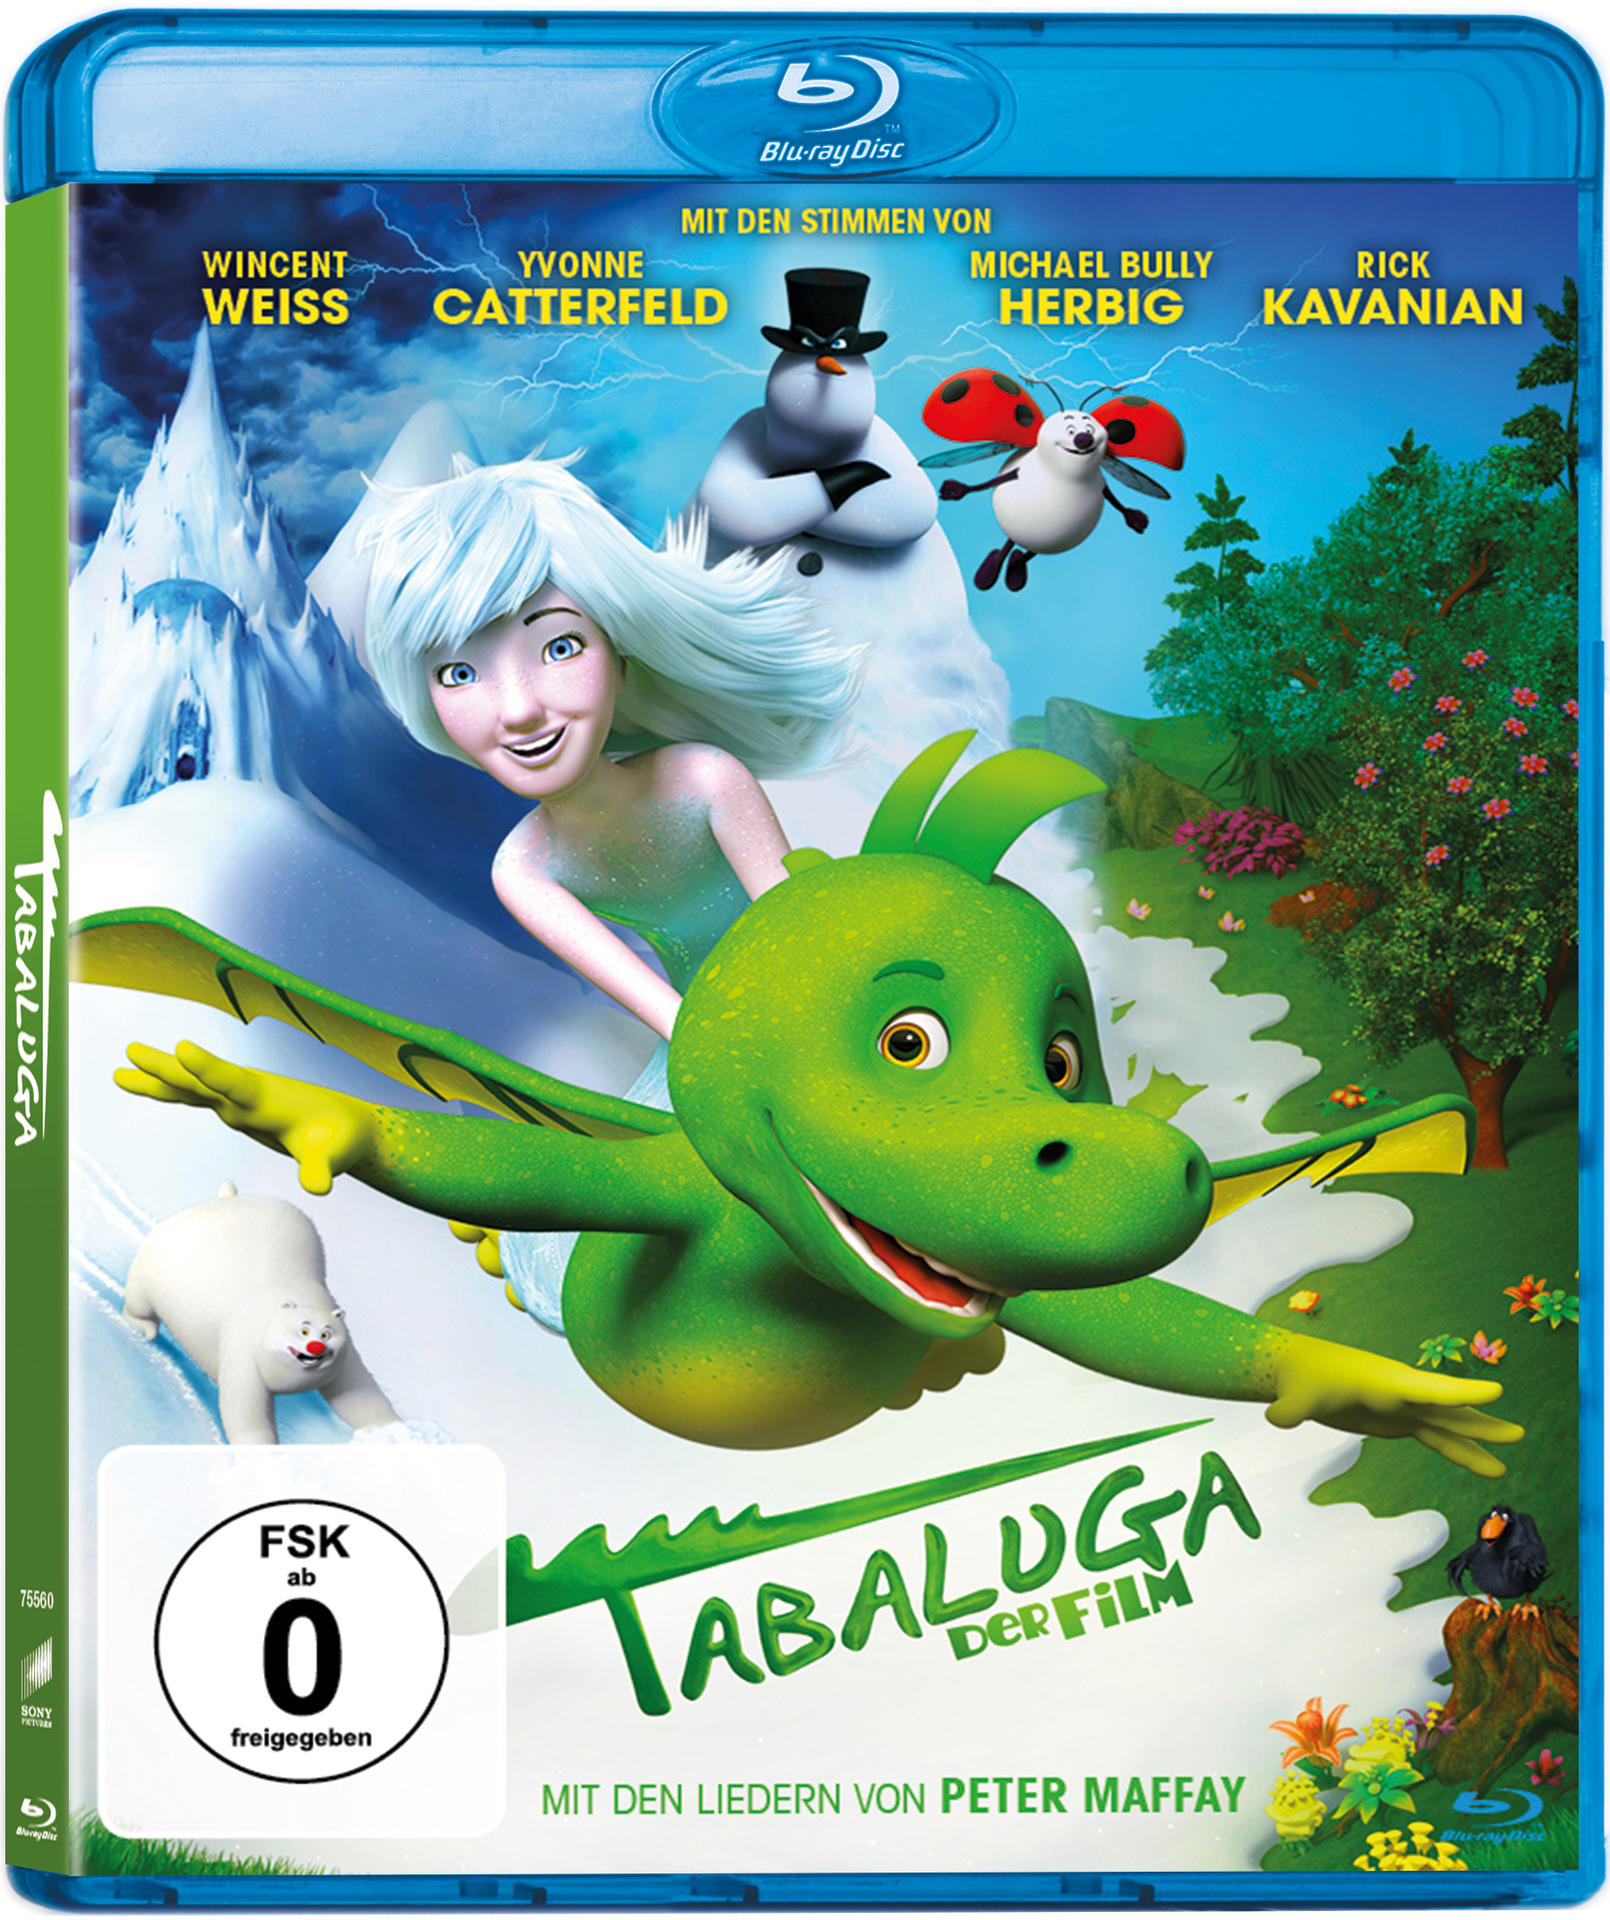 Tabaluga - Der Film Blu-ray